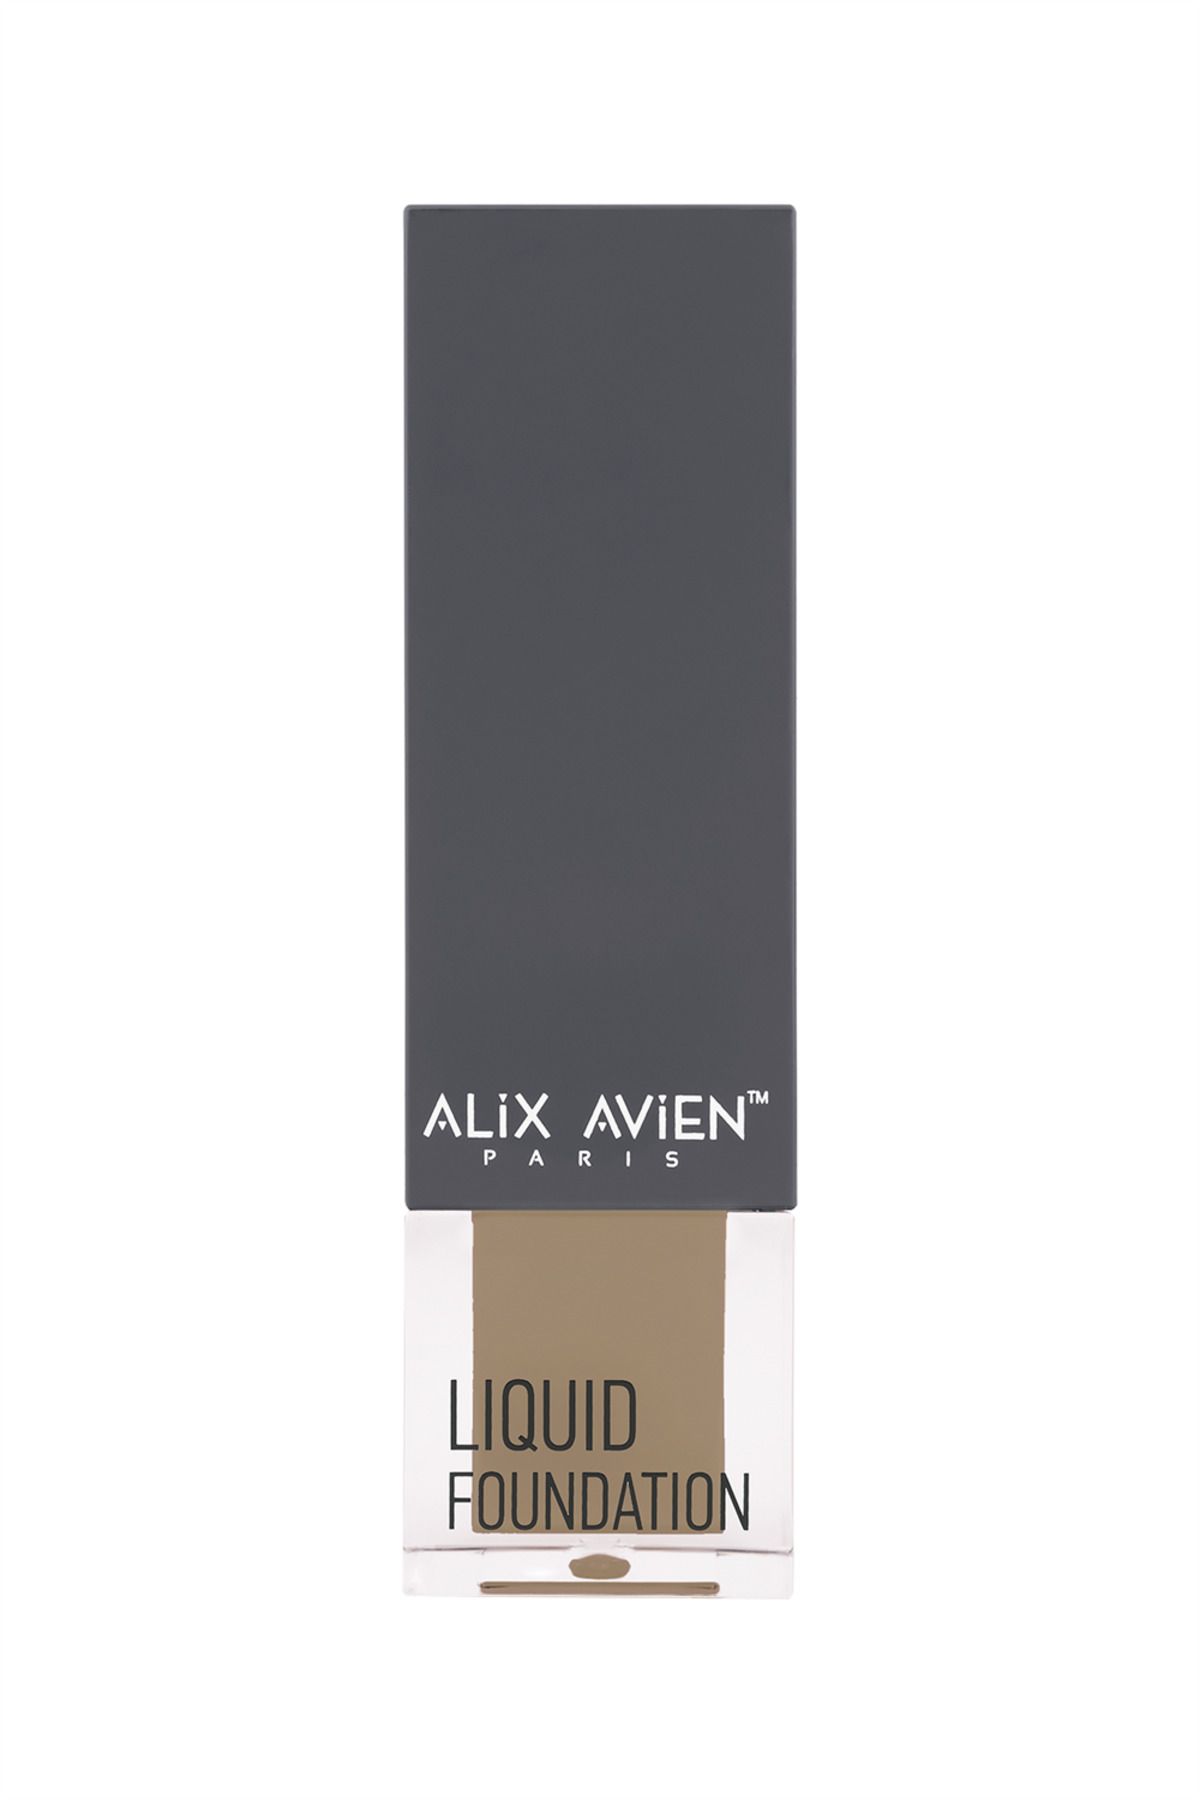 Alix Avien Liquid Foundation 312 Warm Caramel-likit Fondöten Ten Makyajı-doğal Parlak Etki Kremsi Yapı-spf 35